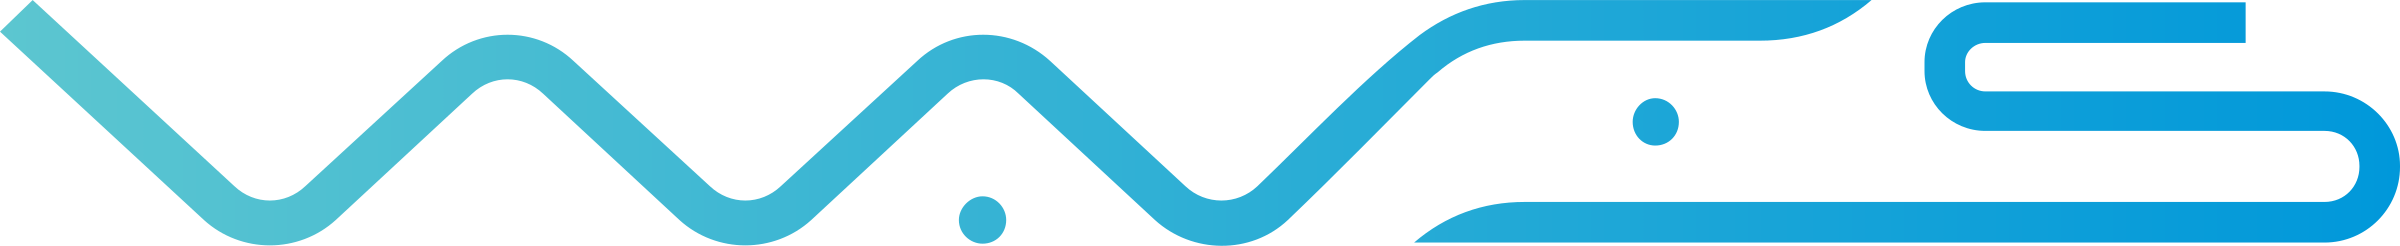 Waves Logo Black And White - Waves Logo (2400x246)